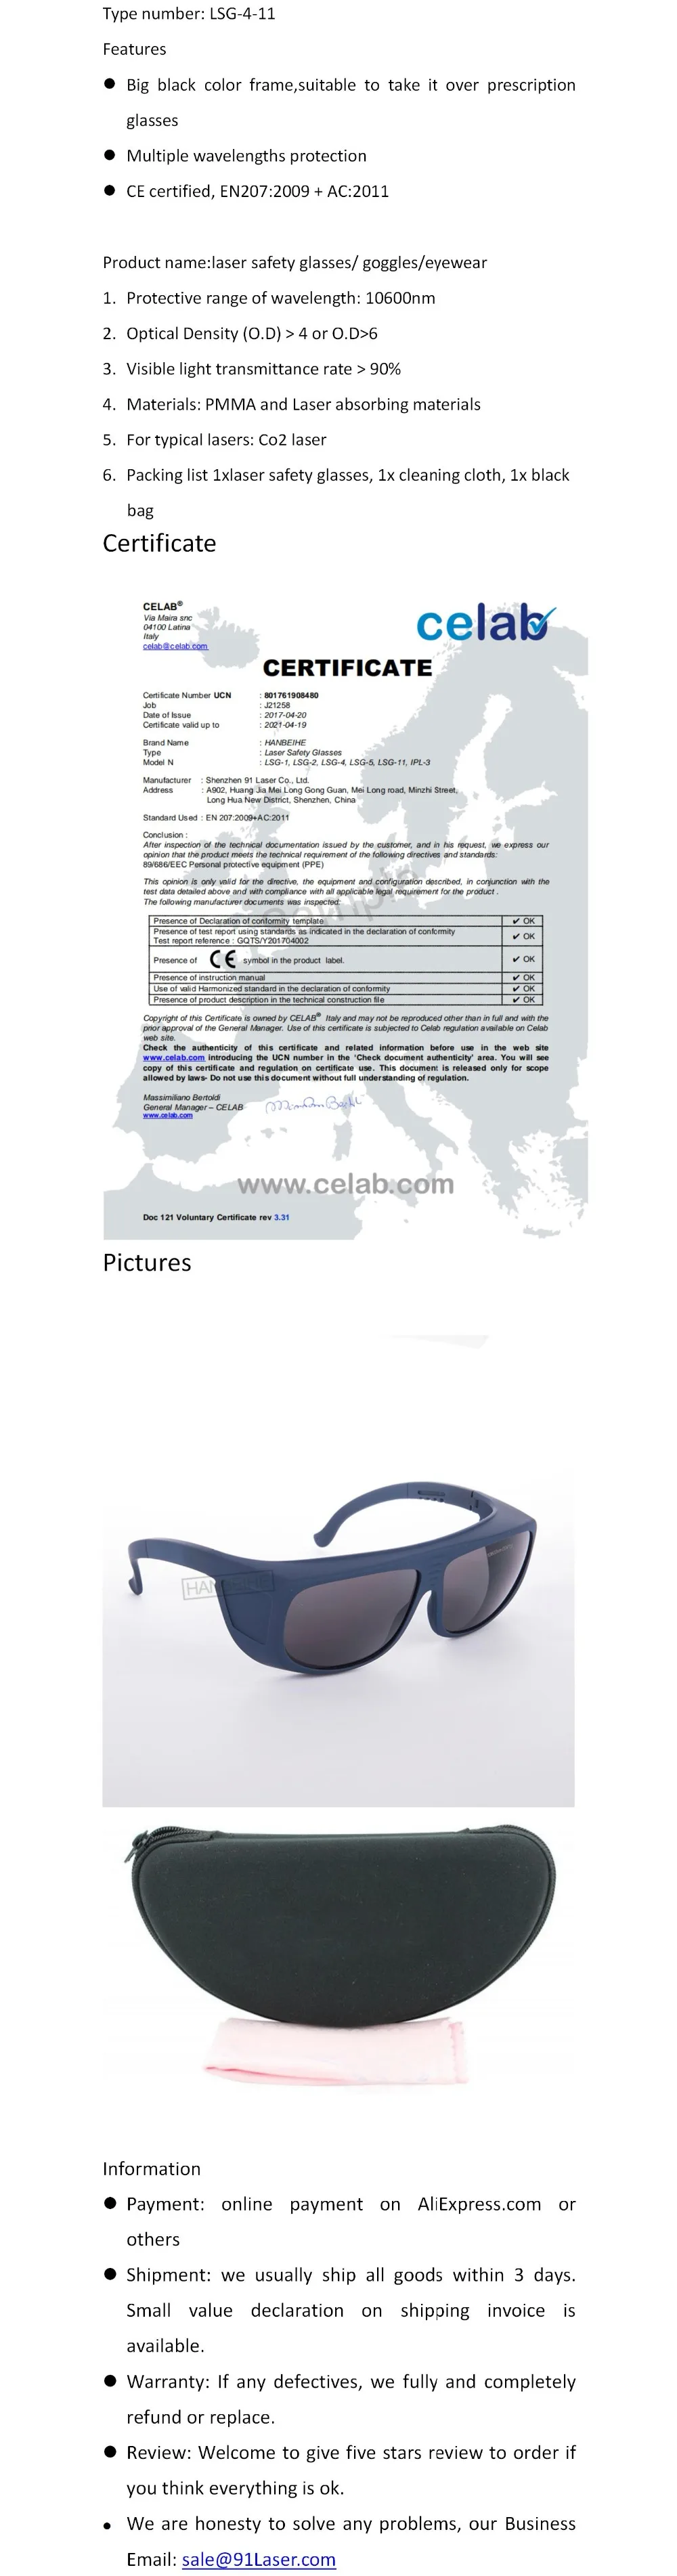 LSG-4 co2 лазерные защитные очки для 10600nm Co2 лазер, CE O.D 6+ VLT> 95